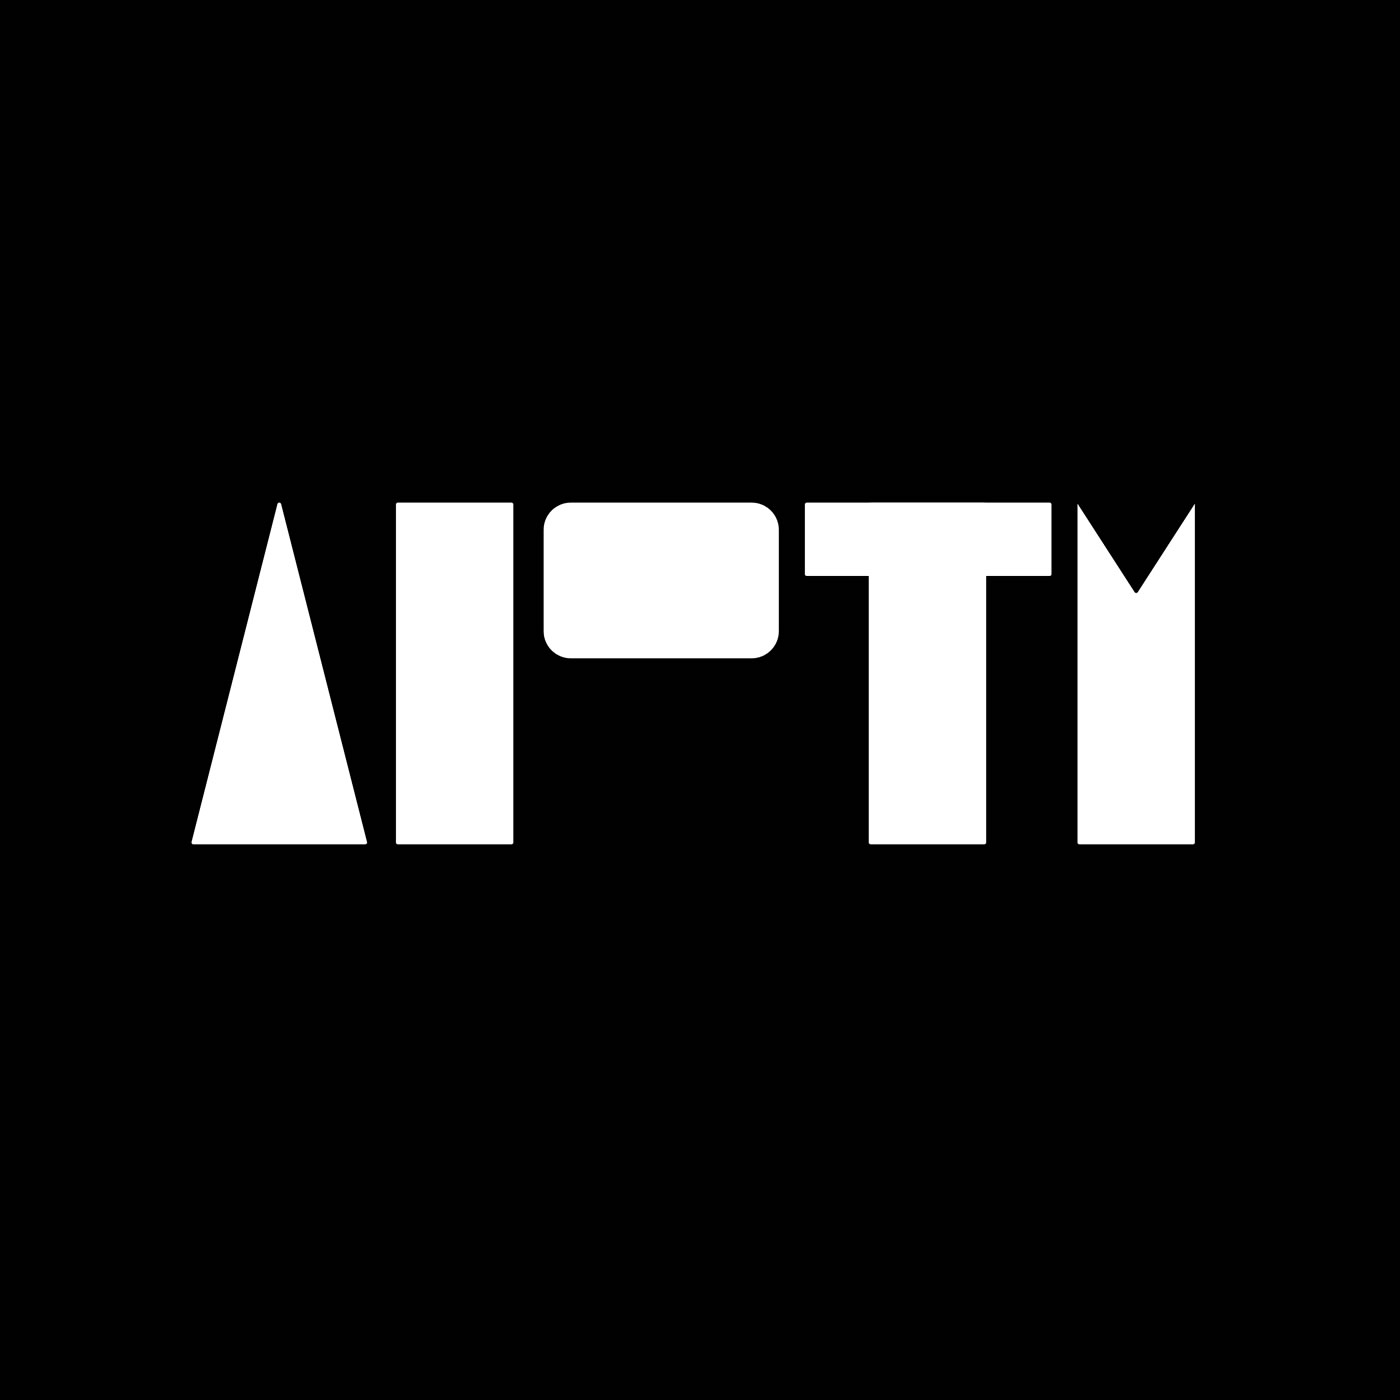 AIOTM - Video Series #6